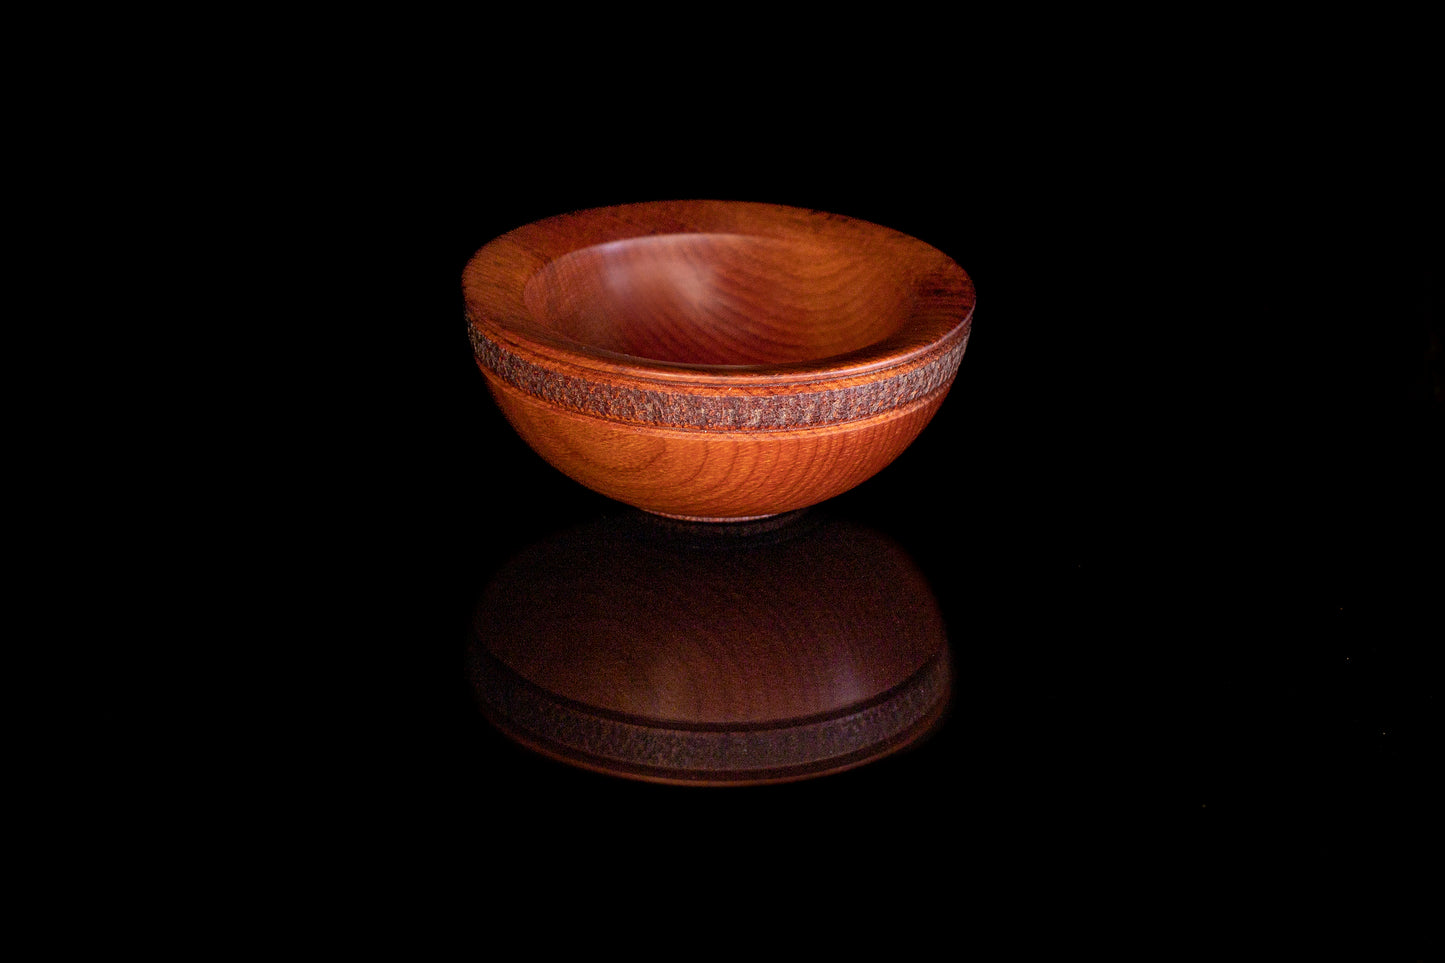 Matai Wood Bowl by Woodturner Mark Russell No390